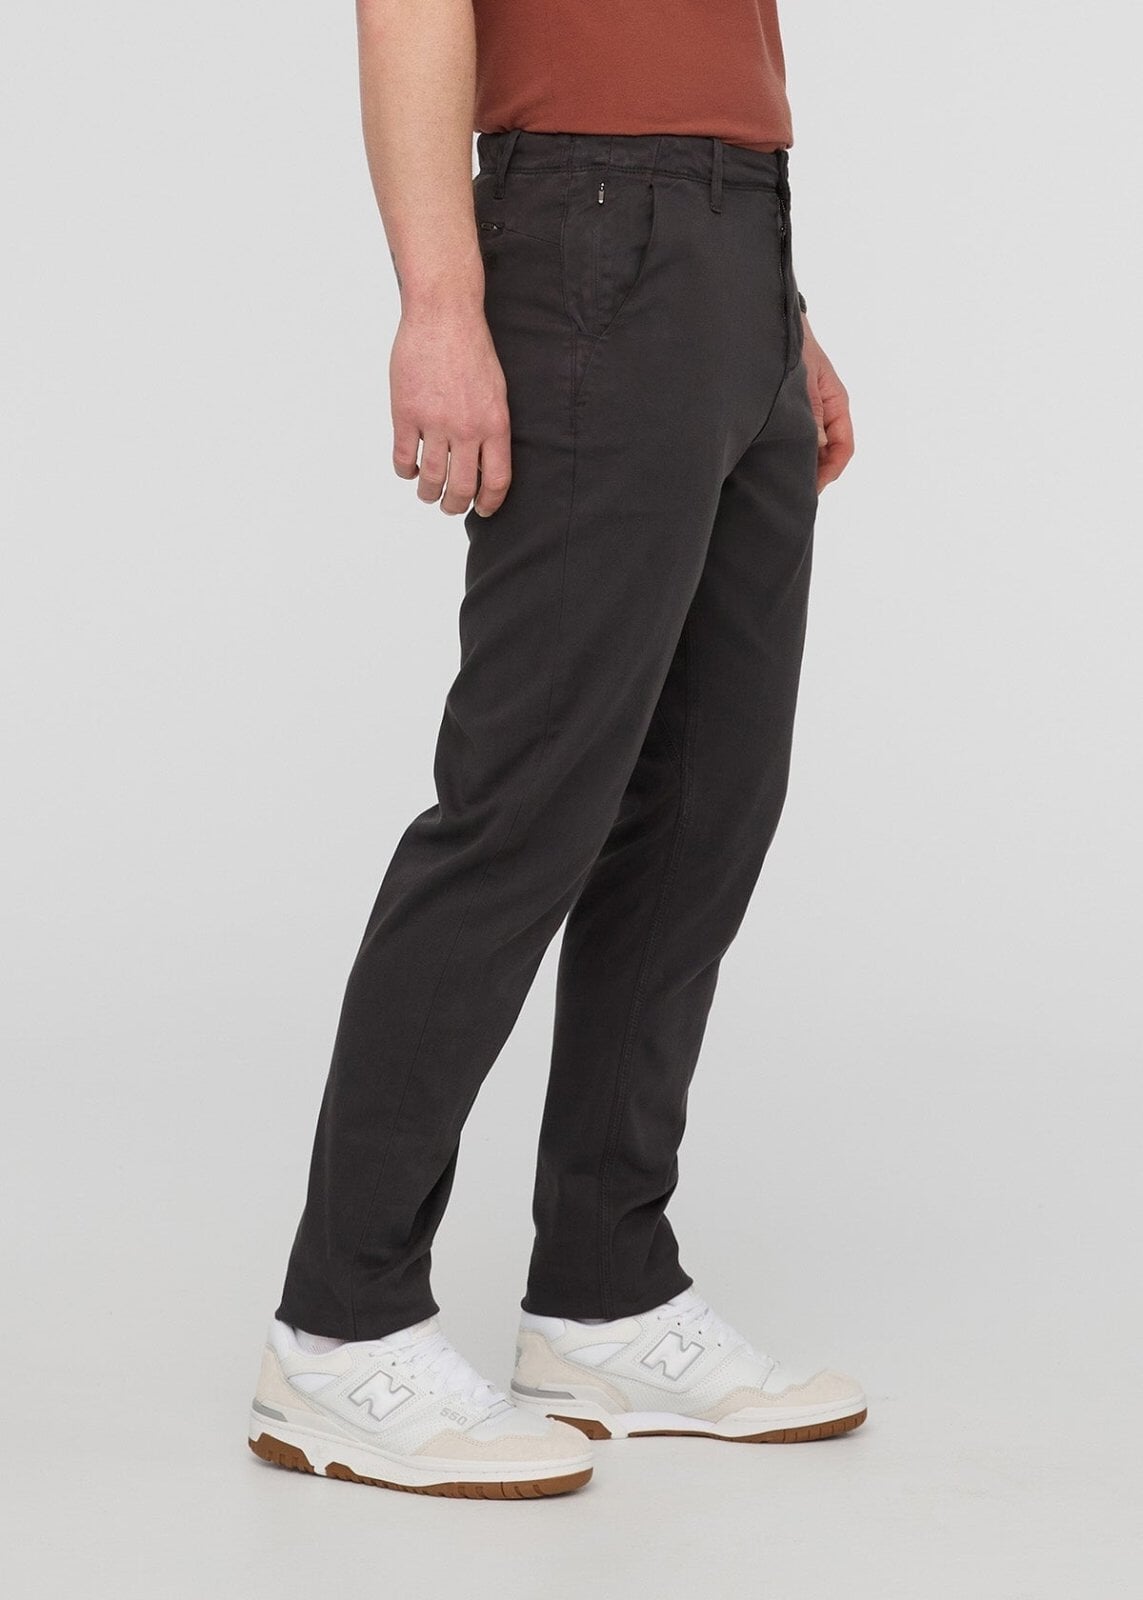 Men's Charcoal Grey Cuffed Slim Fit Trousers – Threadbare